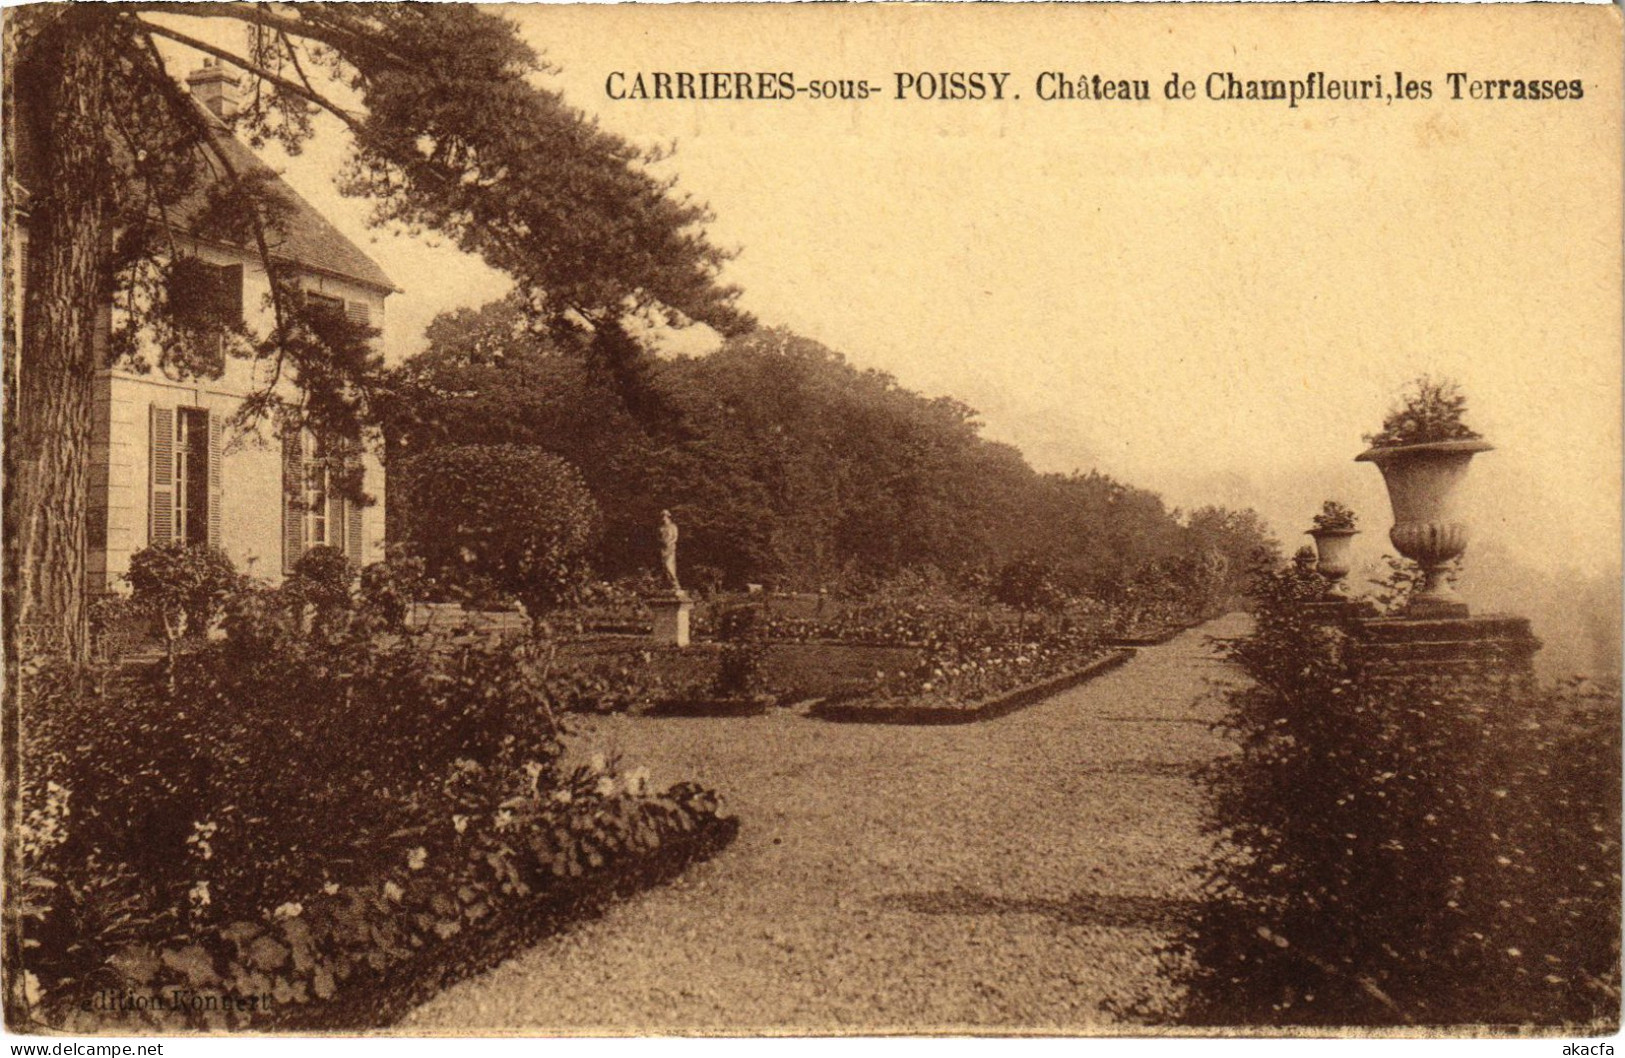 CPA CARRIERES-sous-POISSY Chateau De Champfleuri - Terrasses (1385075) - Carrieres Sous Poissy